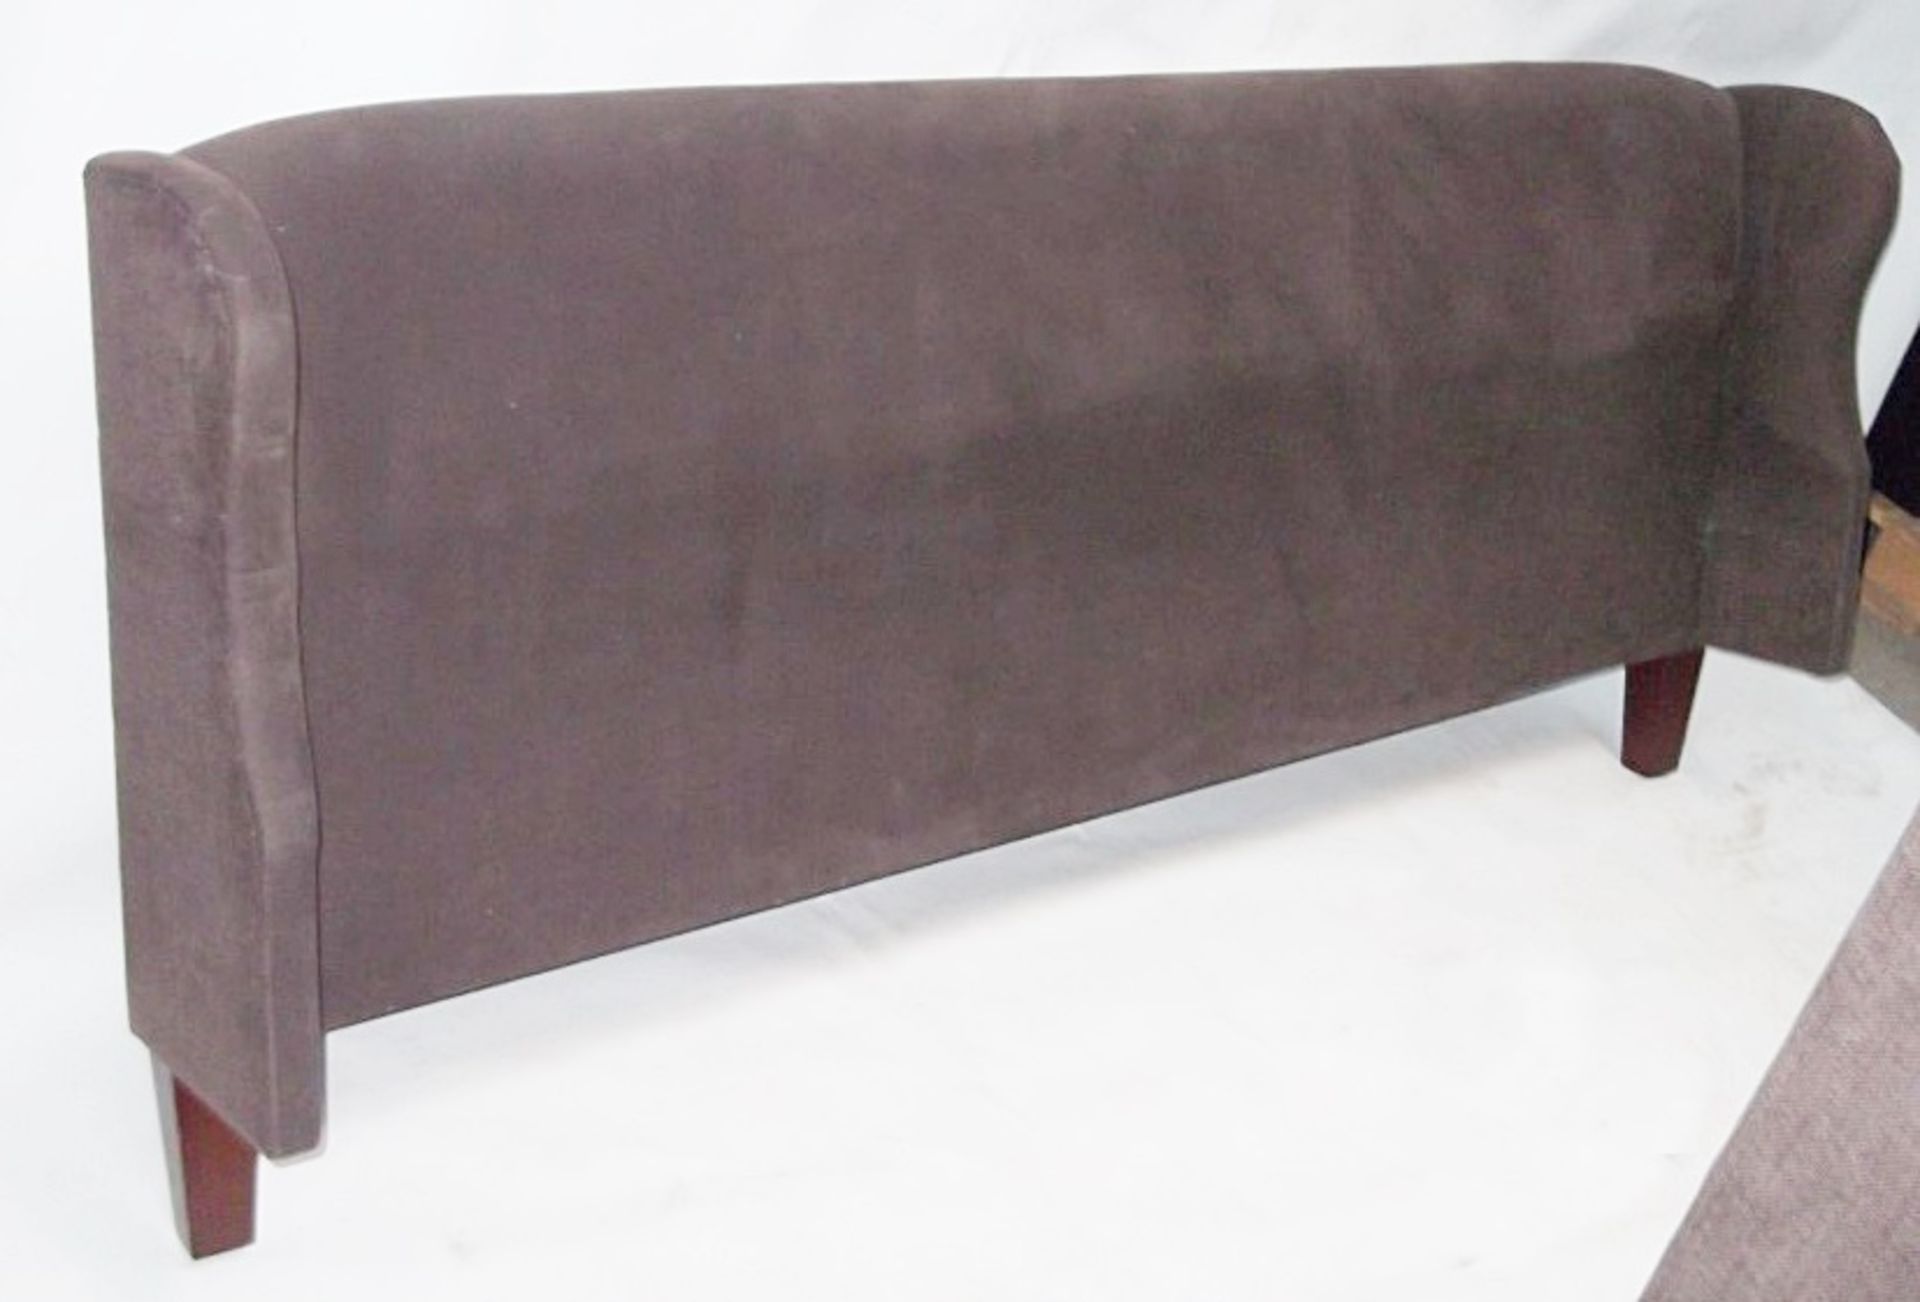 1 x MARRAM Lysander Bed - Super Kingsize: 180 x 200cm - Colour: Chocolate & Mocha - Ref: 3944557 - - Image 2 of 11